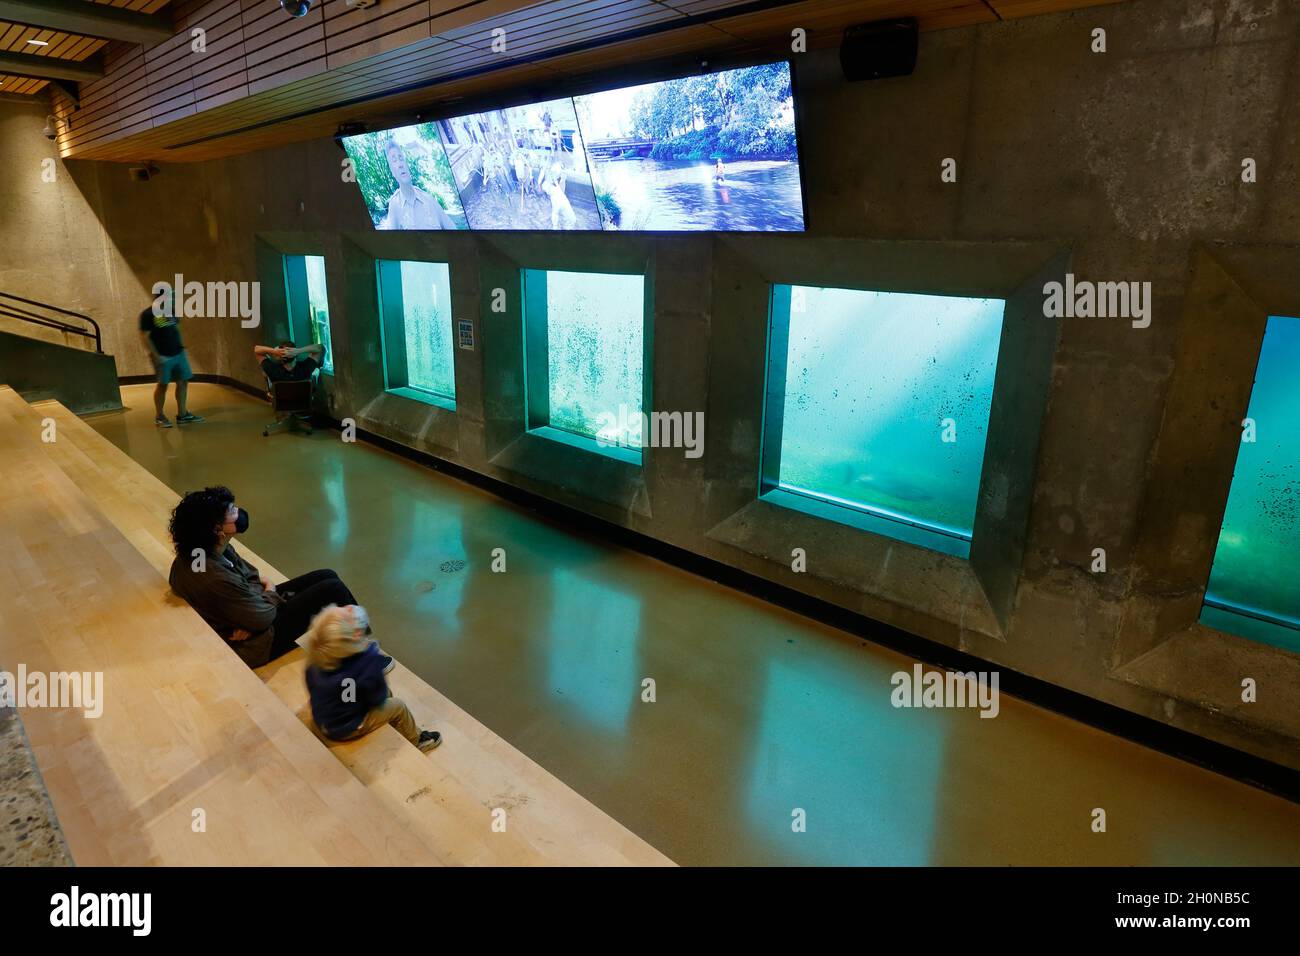 Hiram M. Chittenden Locks, Ballard Locks Fish Ladder Viewing Room, Seattle, Washington. Banque D'Images